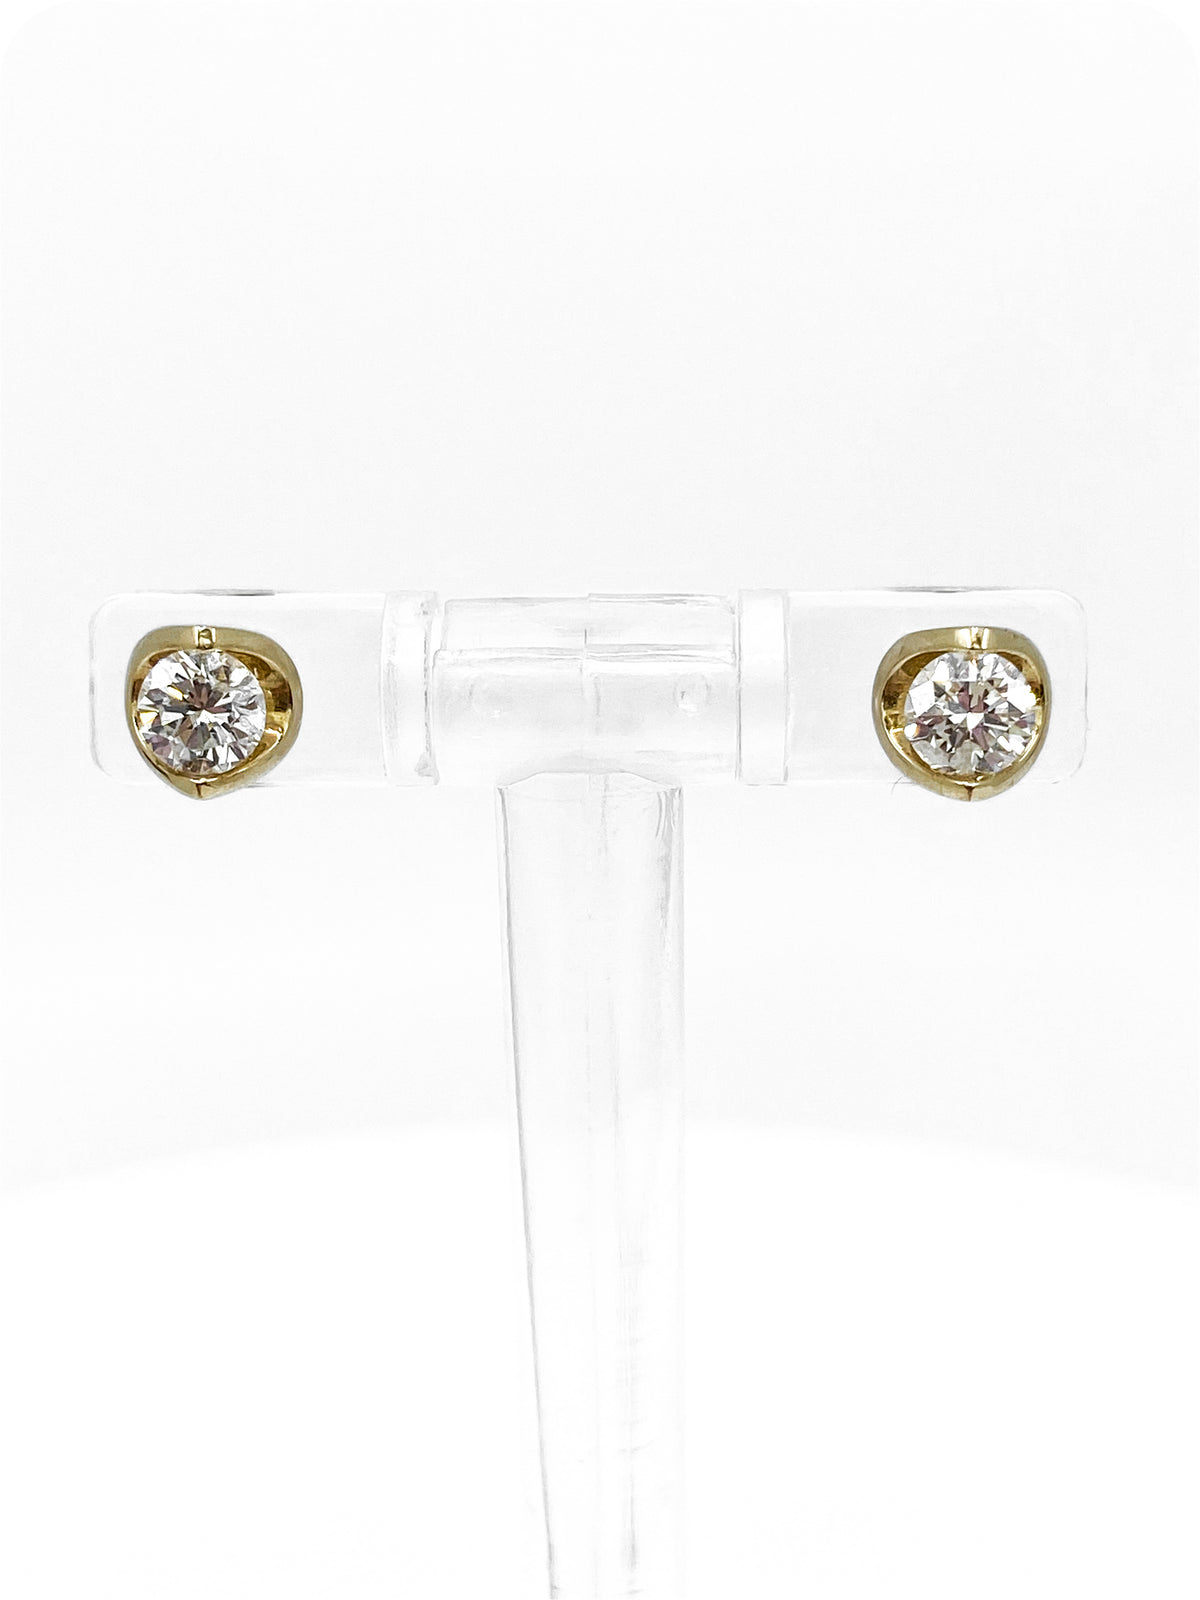 14K Yellow Gold 1.00cttw Round Cut Canadian Diamond Stud Earrings